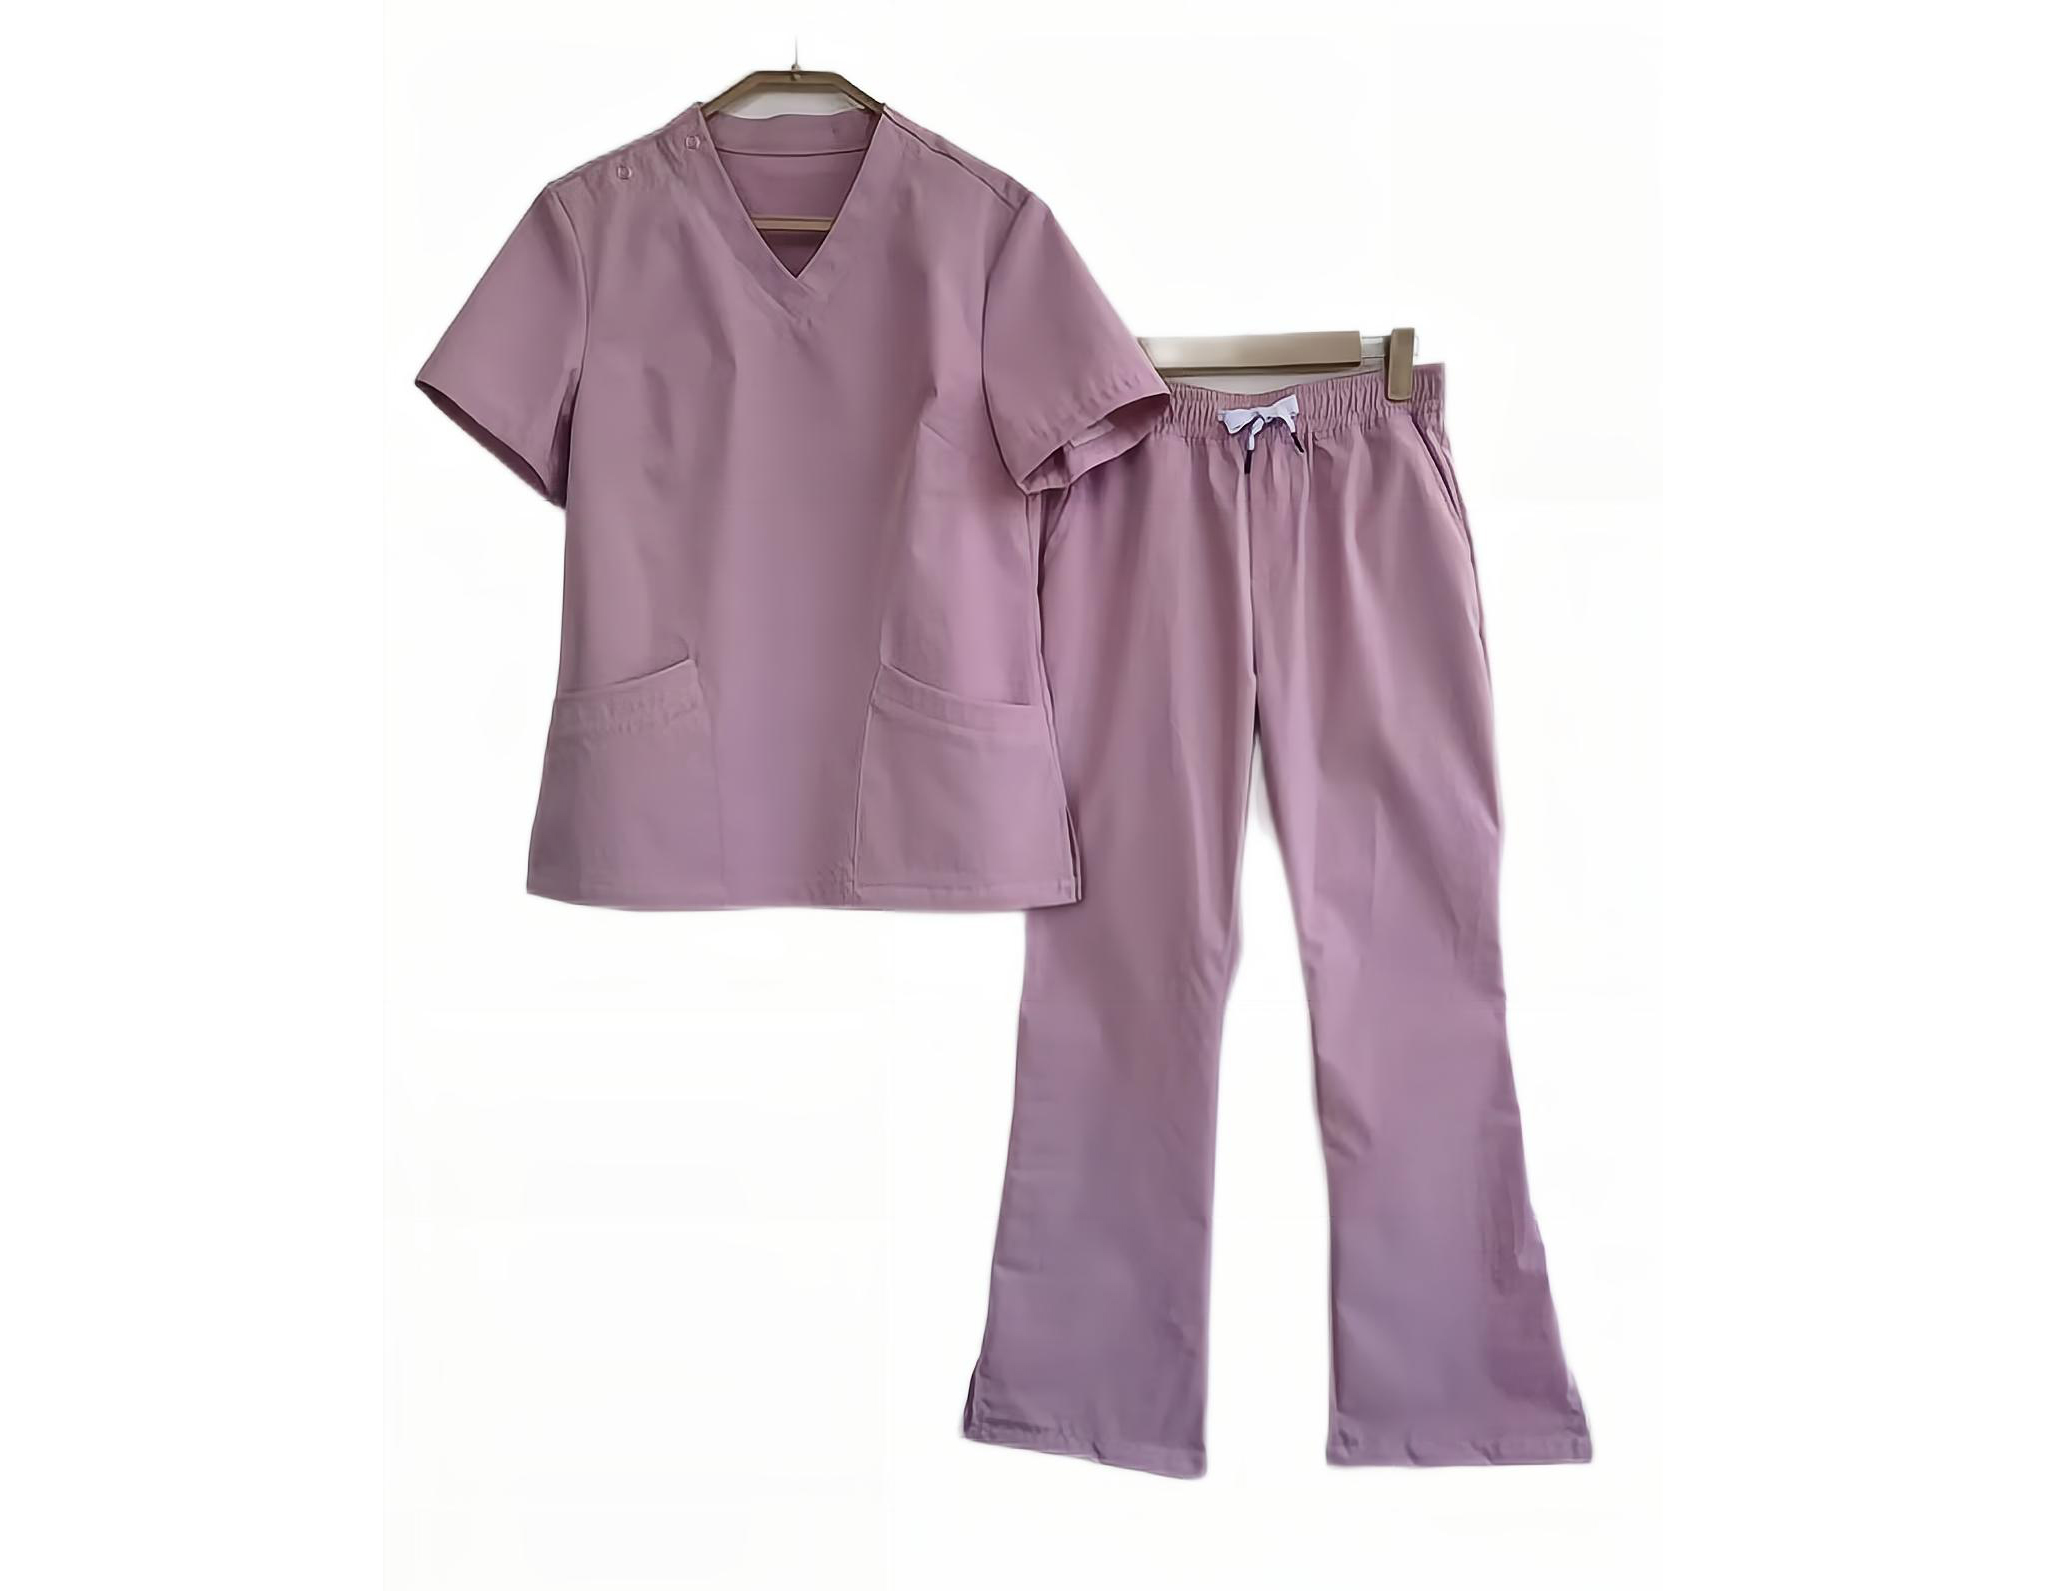 Hospitalis Uniform Scrubs Suit